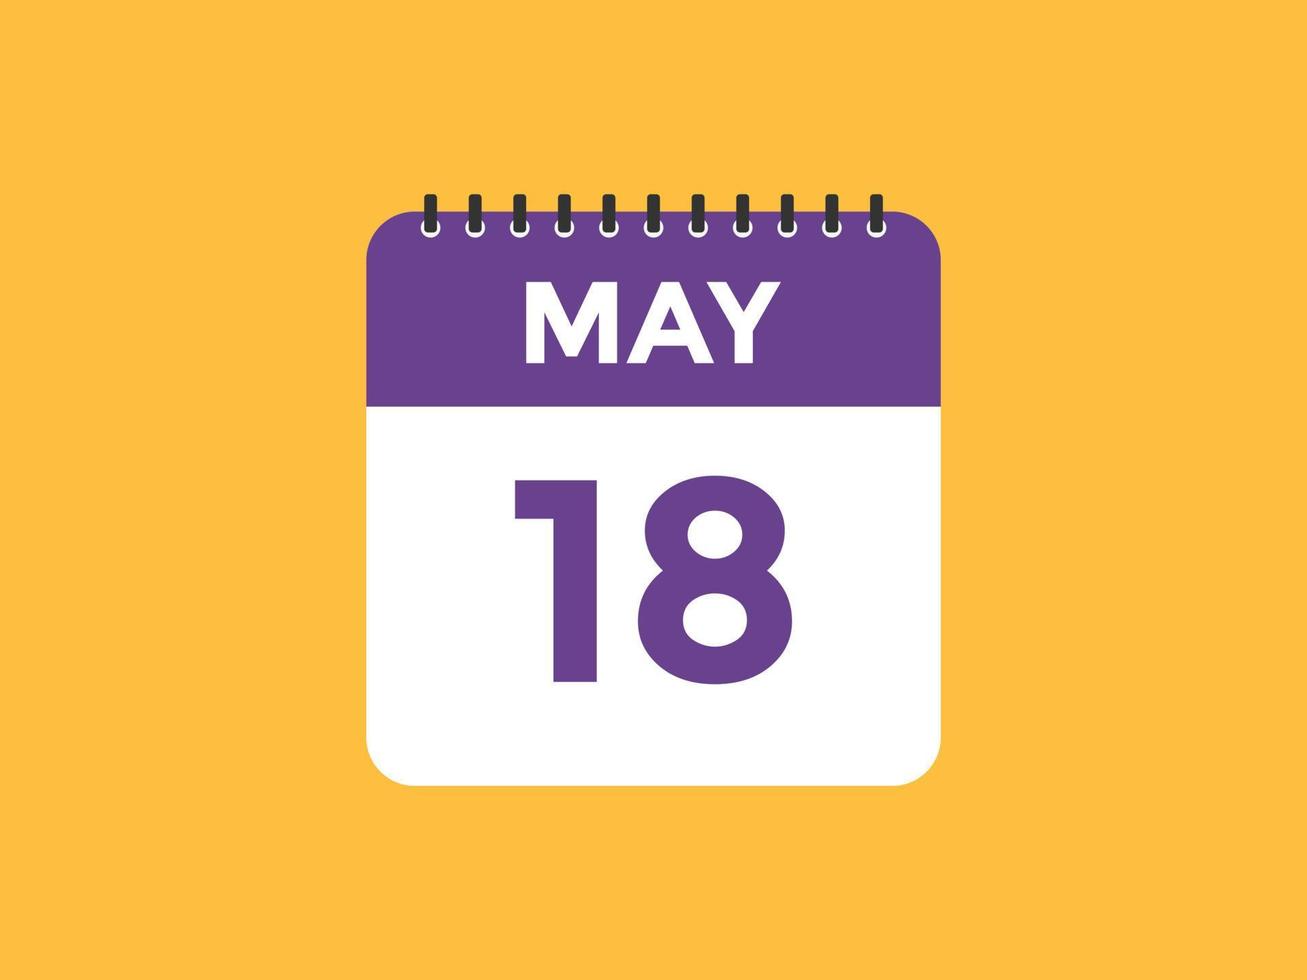 18. Mai Kalendererinnerung. 18. mai tägliche kalendersymbolvorlage. Kalender 18. Mai Icon-Design-Vorlage. Vektor-Illustration vektor